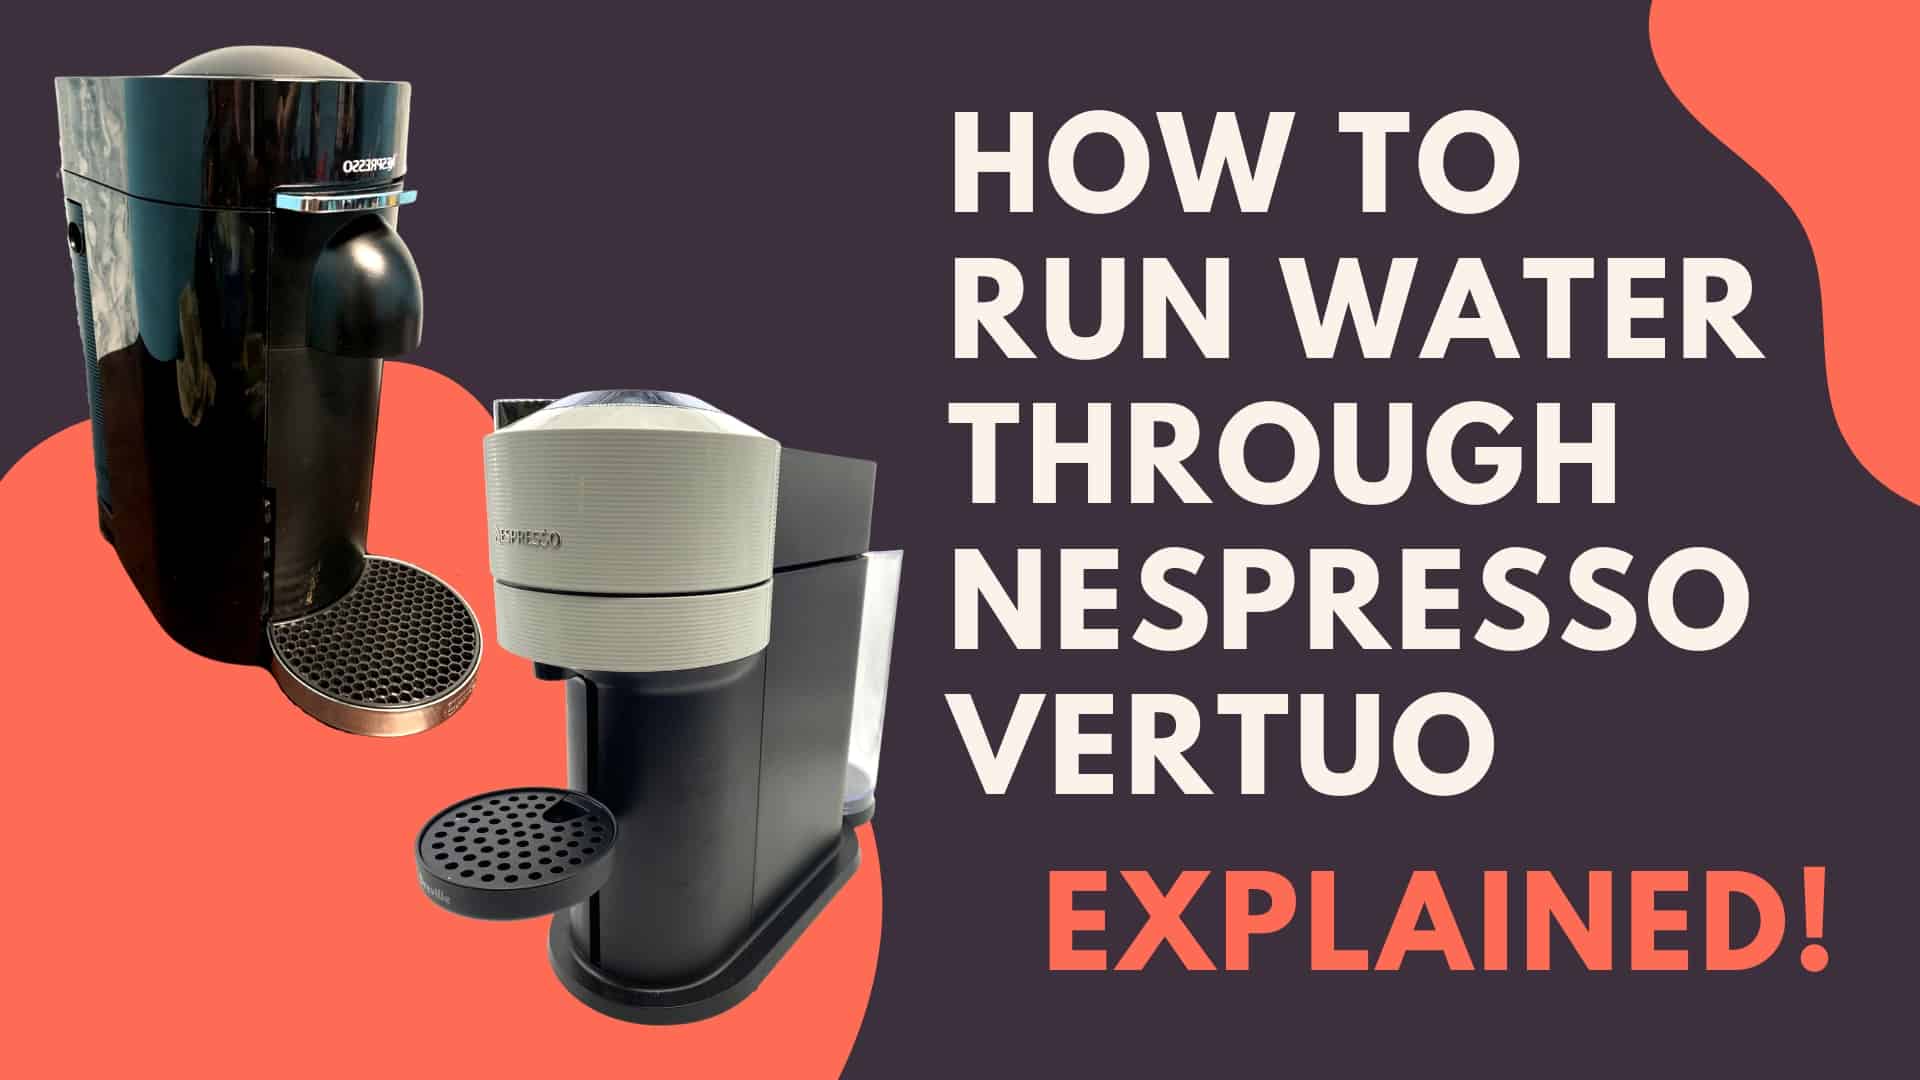 Run water through Nespresso Vertuo